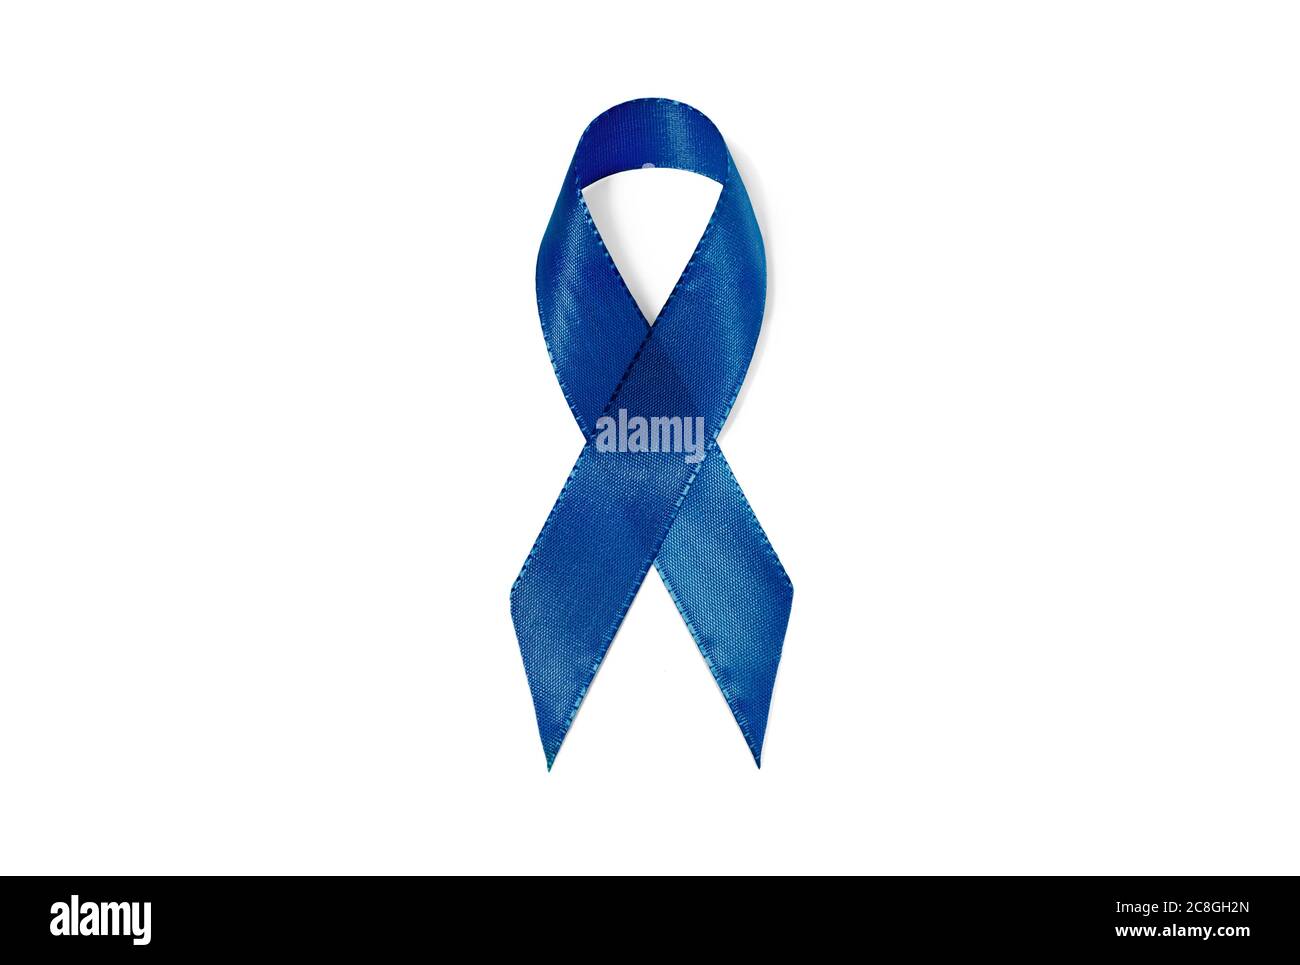 Symbol image Awareness Ribbon Blue, ribbon, sign of solidarity, Transverse Myelitis, Alopecia, support freedom of expression, freedom of the press Stock Photo